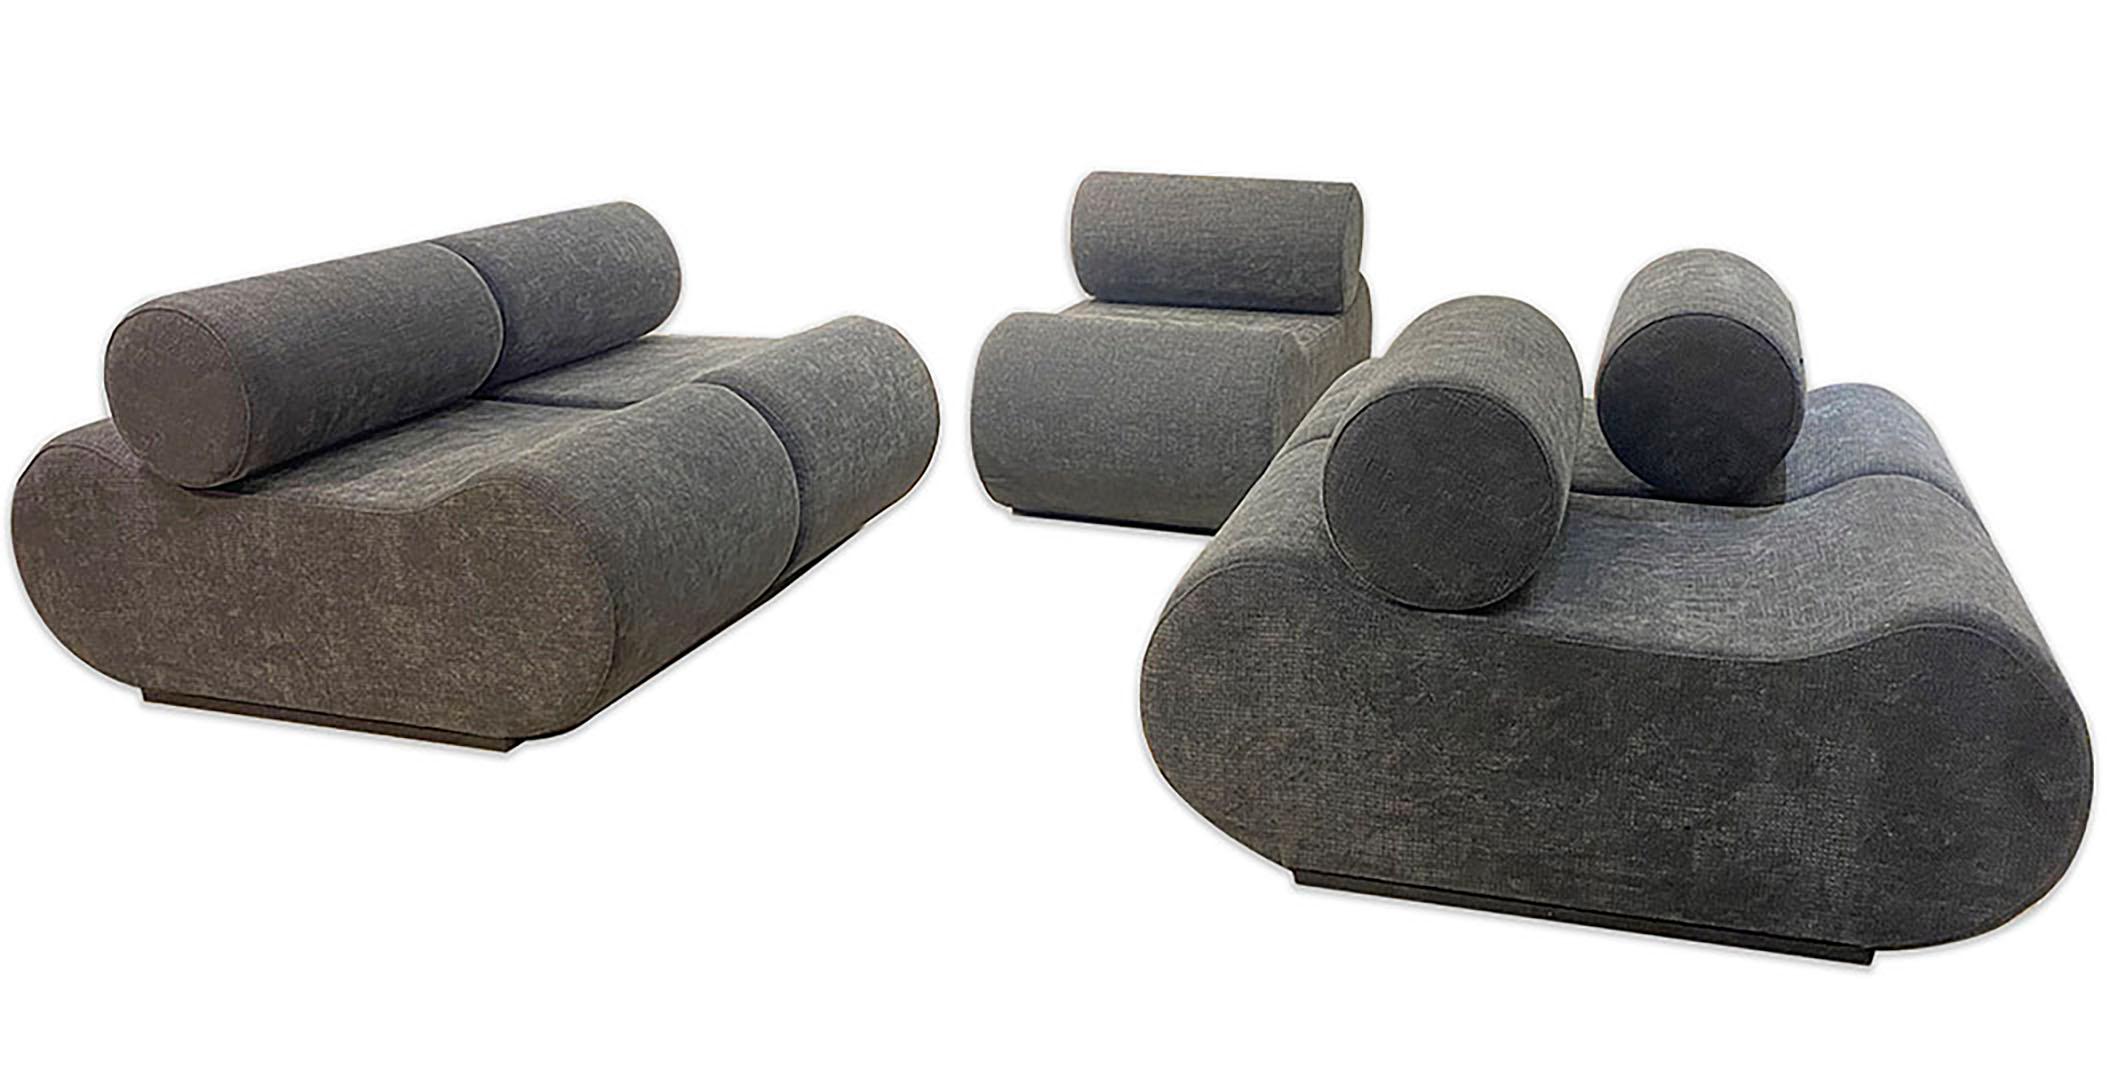 Corbi grey sofa - Klaus Uredat
Modular sofa CORBI Design by Klaus UREDAT 
Set of 5 elements Corbi 
Honeycomb wool fabric in grey tones.
Dimensions 1 module : 70 x60x115cm
Dimensions bolster : ø29,5cmx64cm
Circa 1975
Ref 
Price 8900€ for this